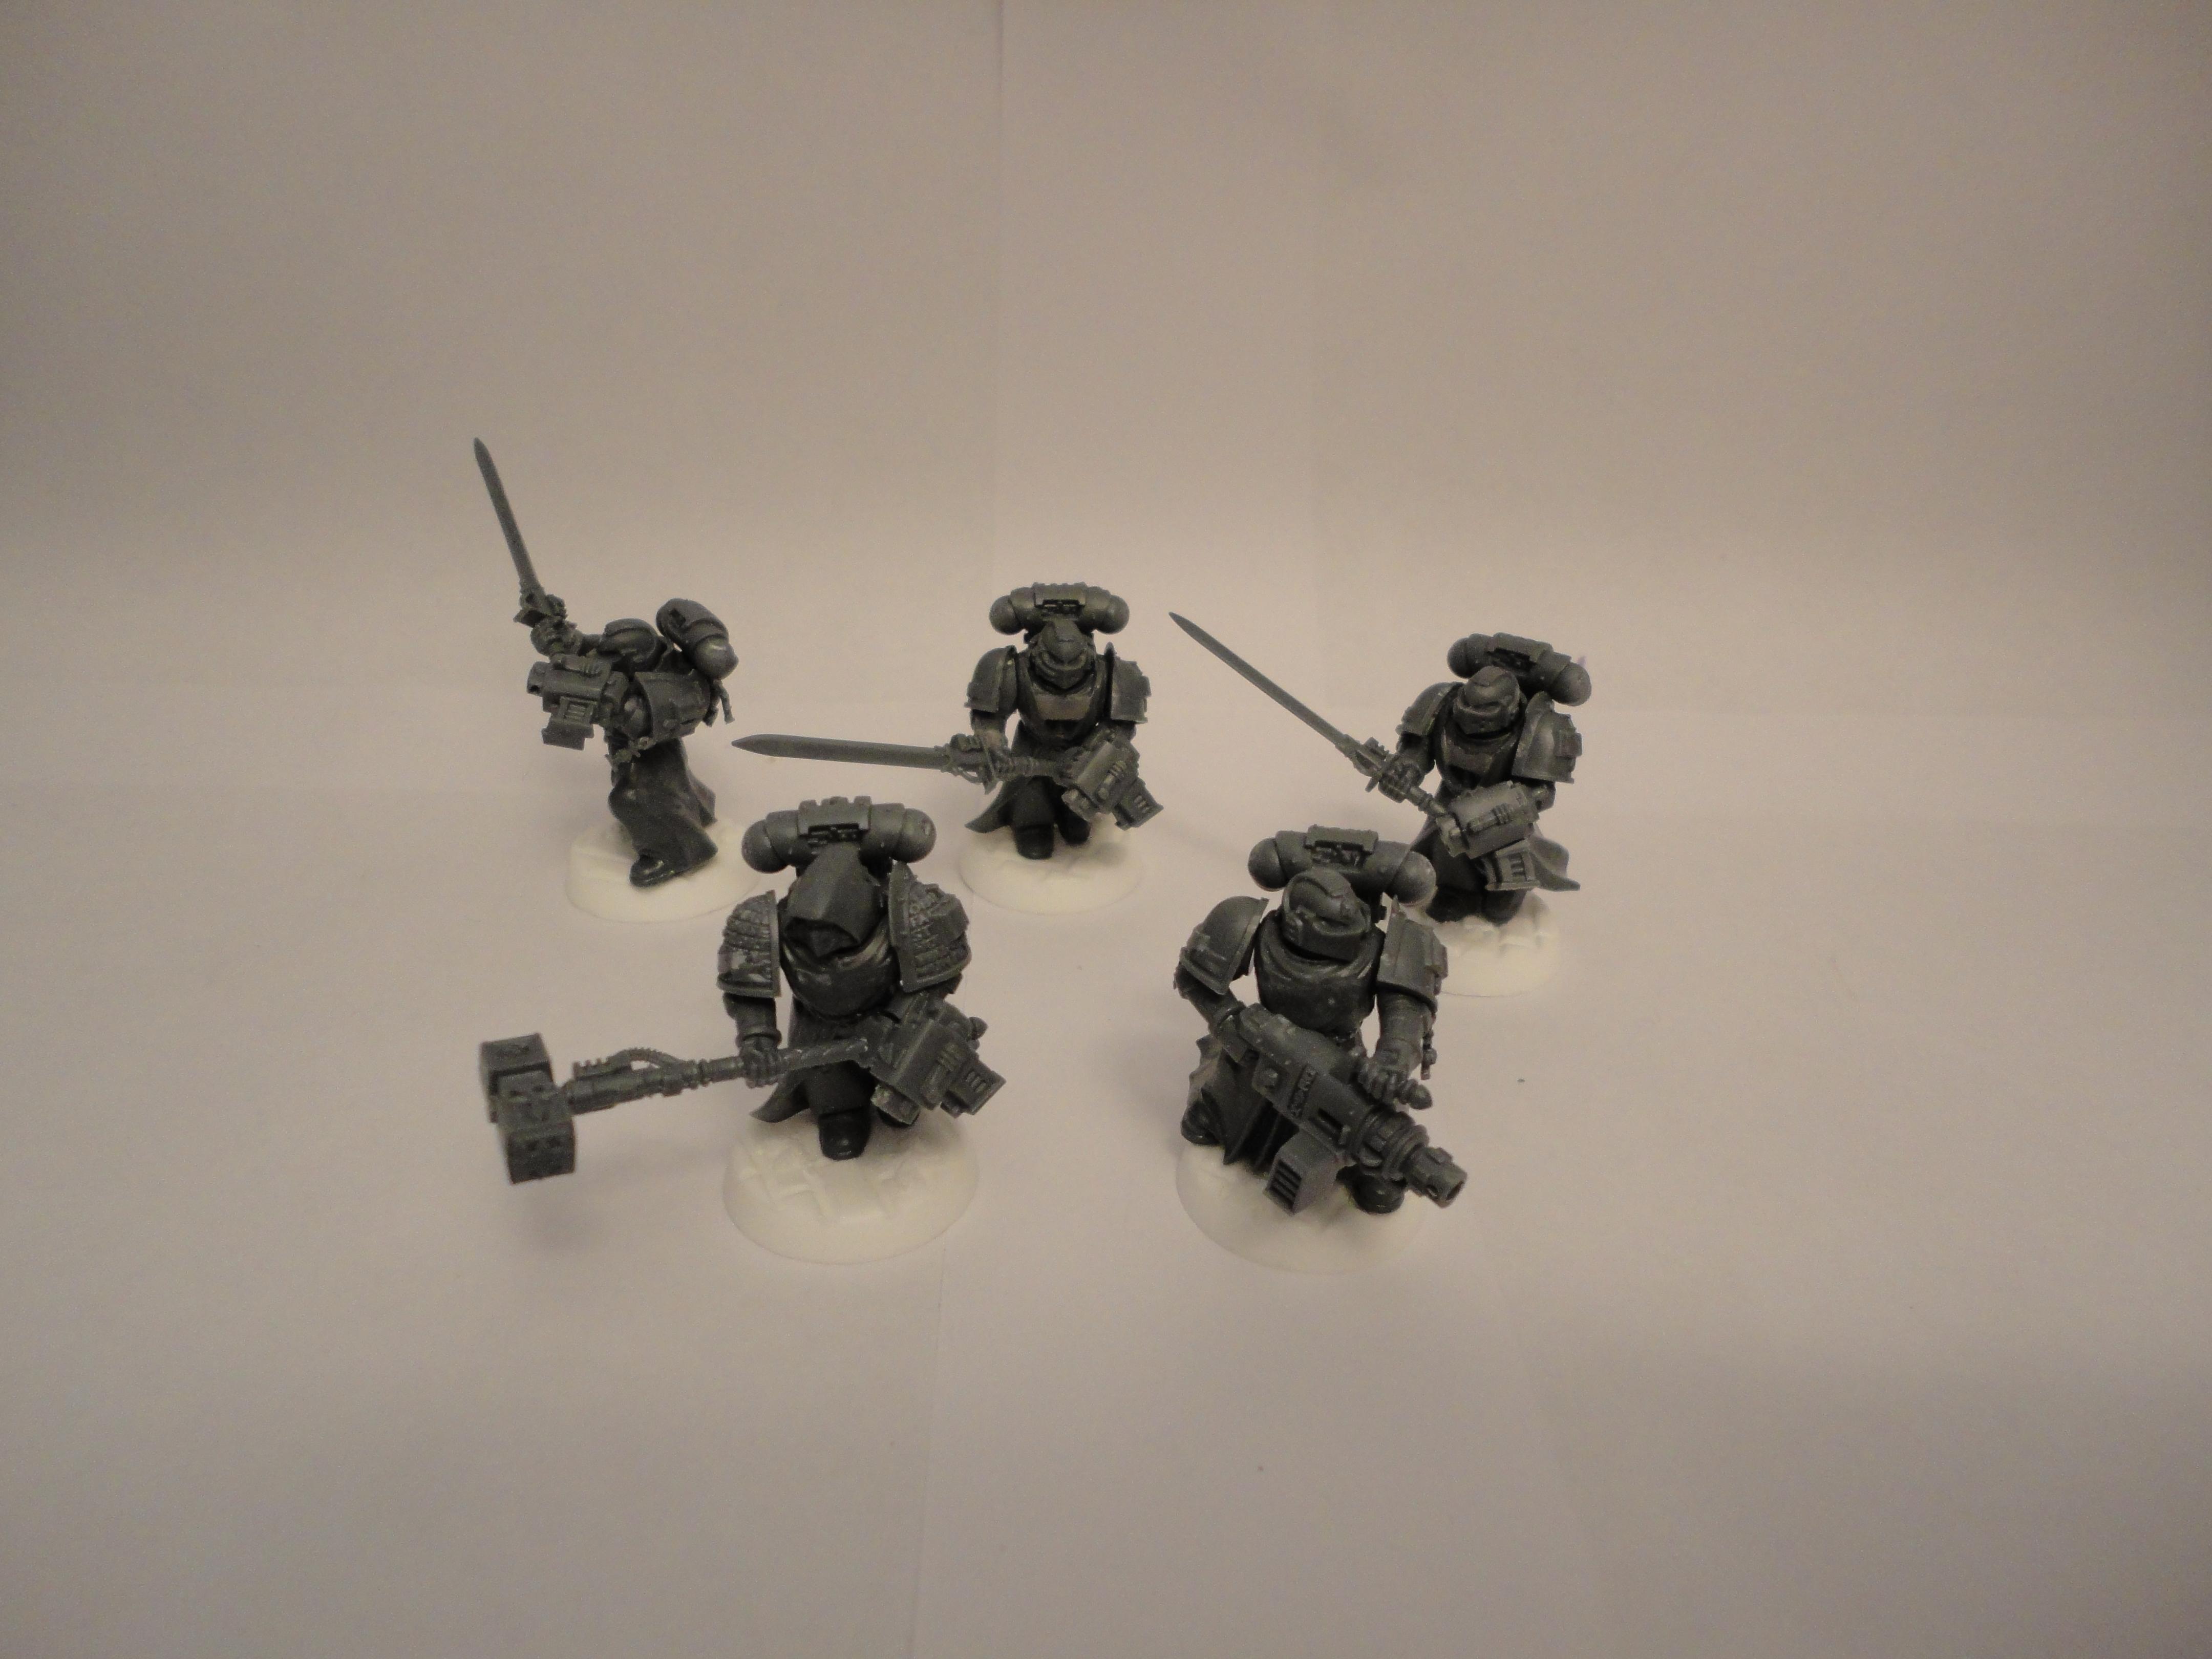 Grey Knight Strike Squad